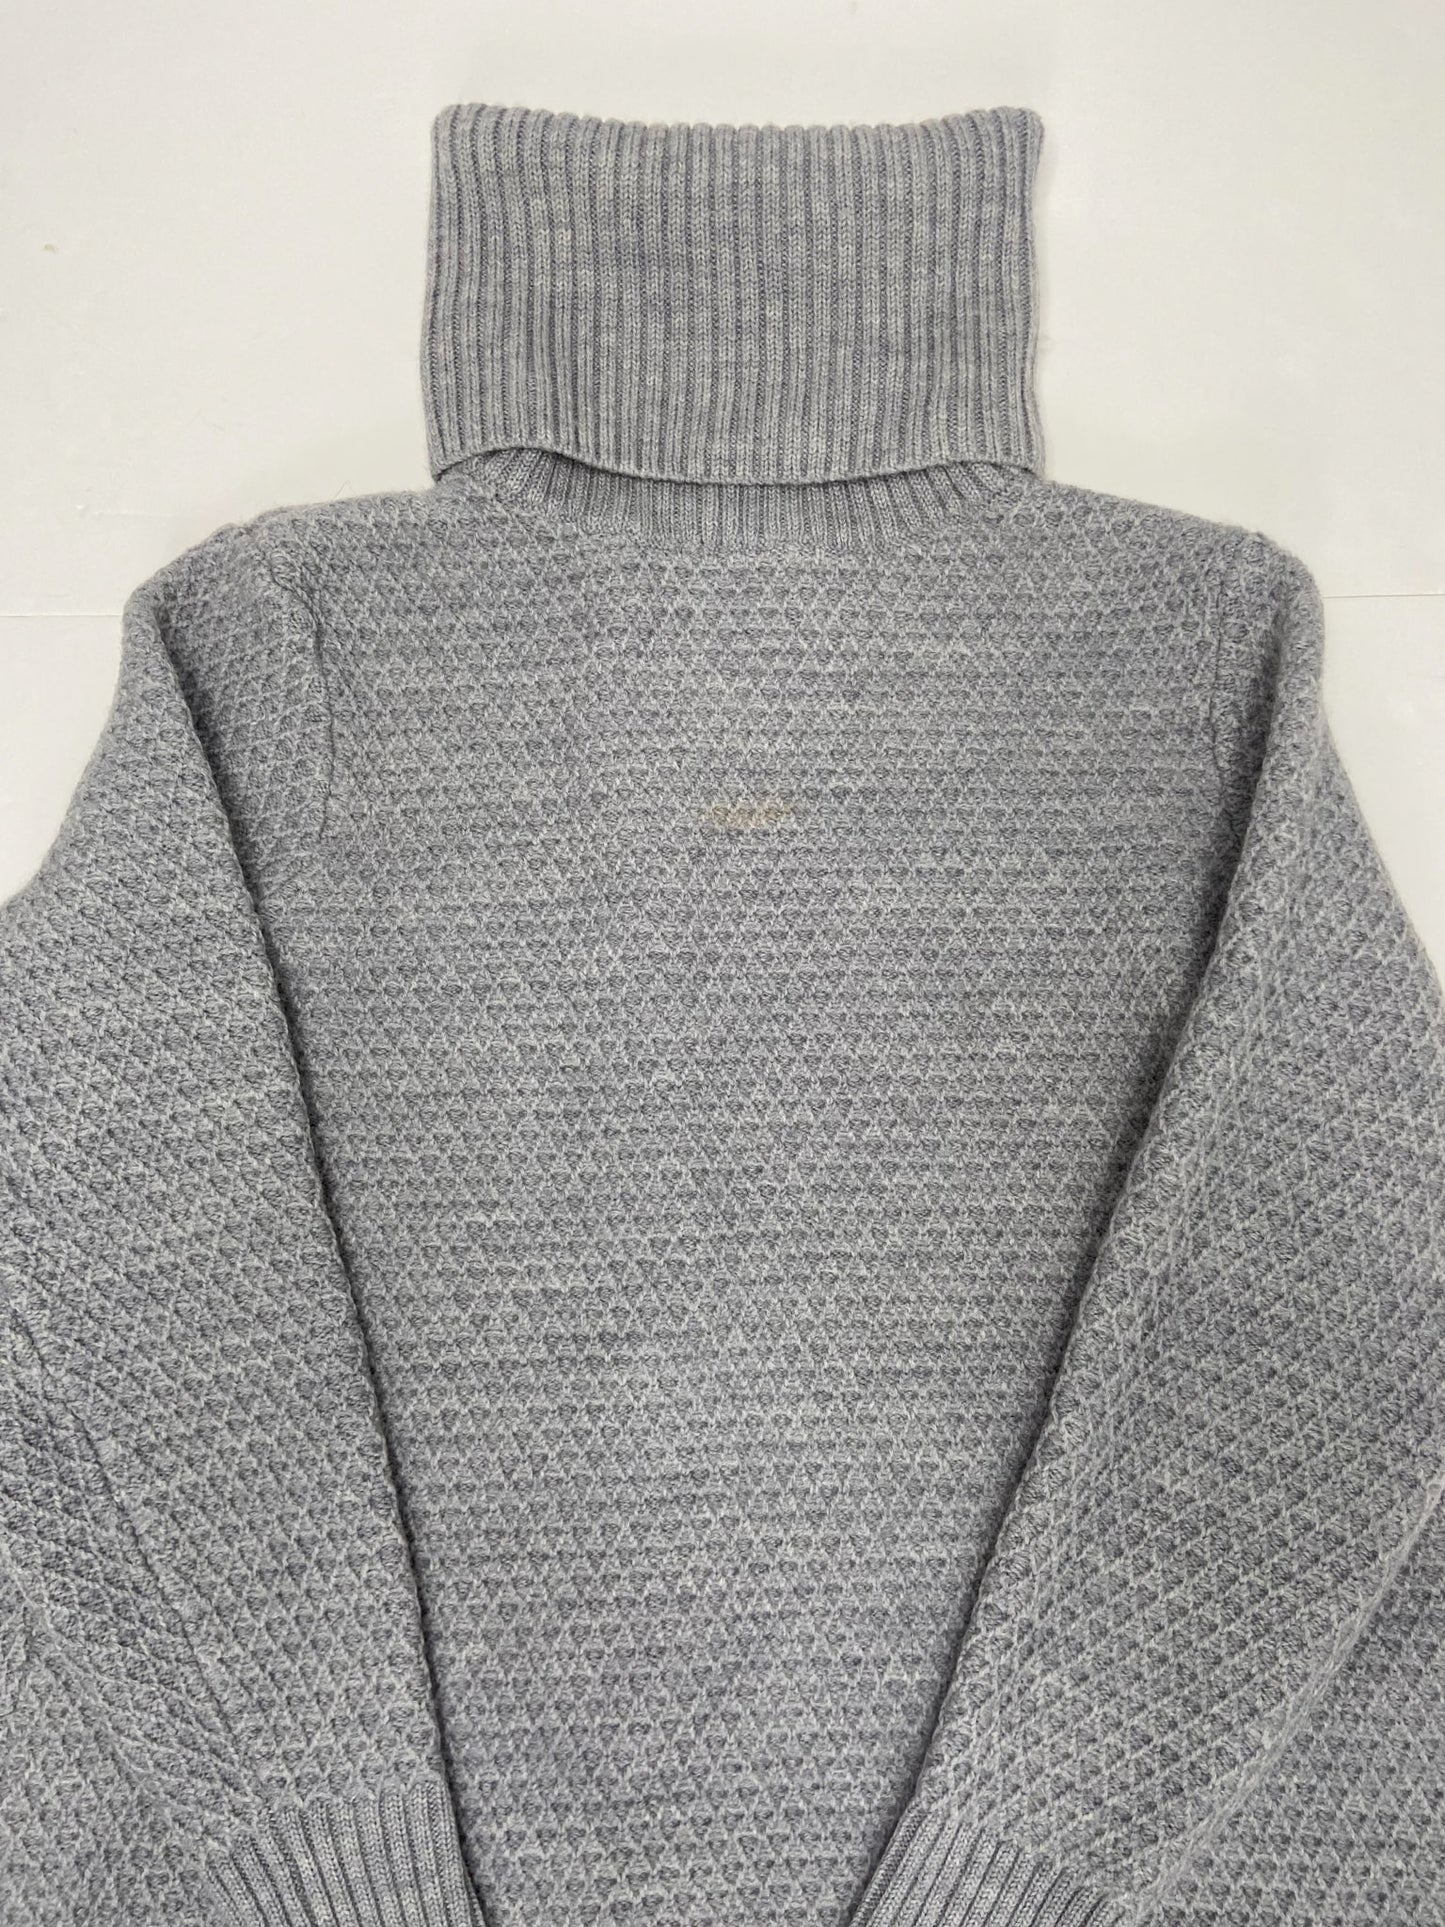 Asmar Knit Turtleneck Sweater - Grey - Women's Medium